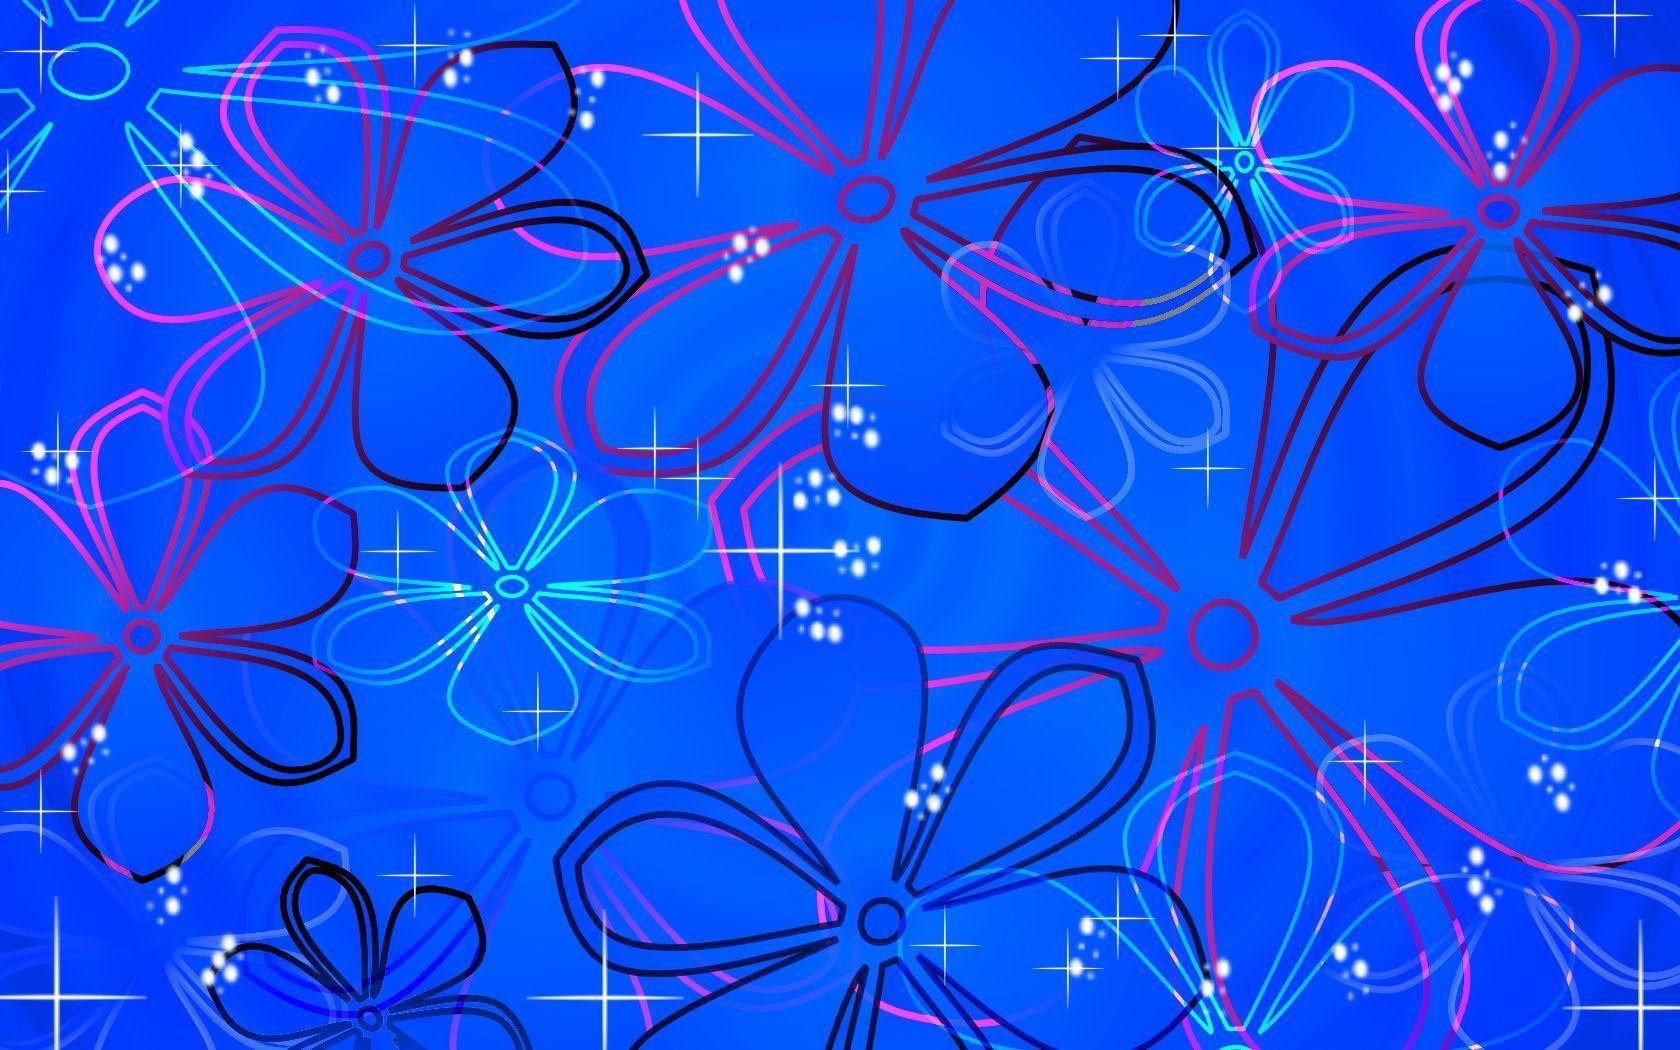 Blue Flower Abstract Wallpaper HD Picture 4 HD Wallpaper. lzamgs